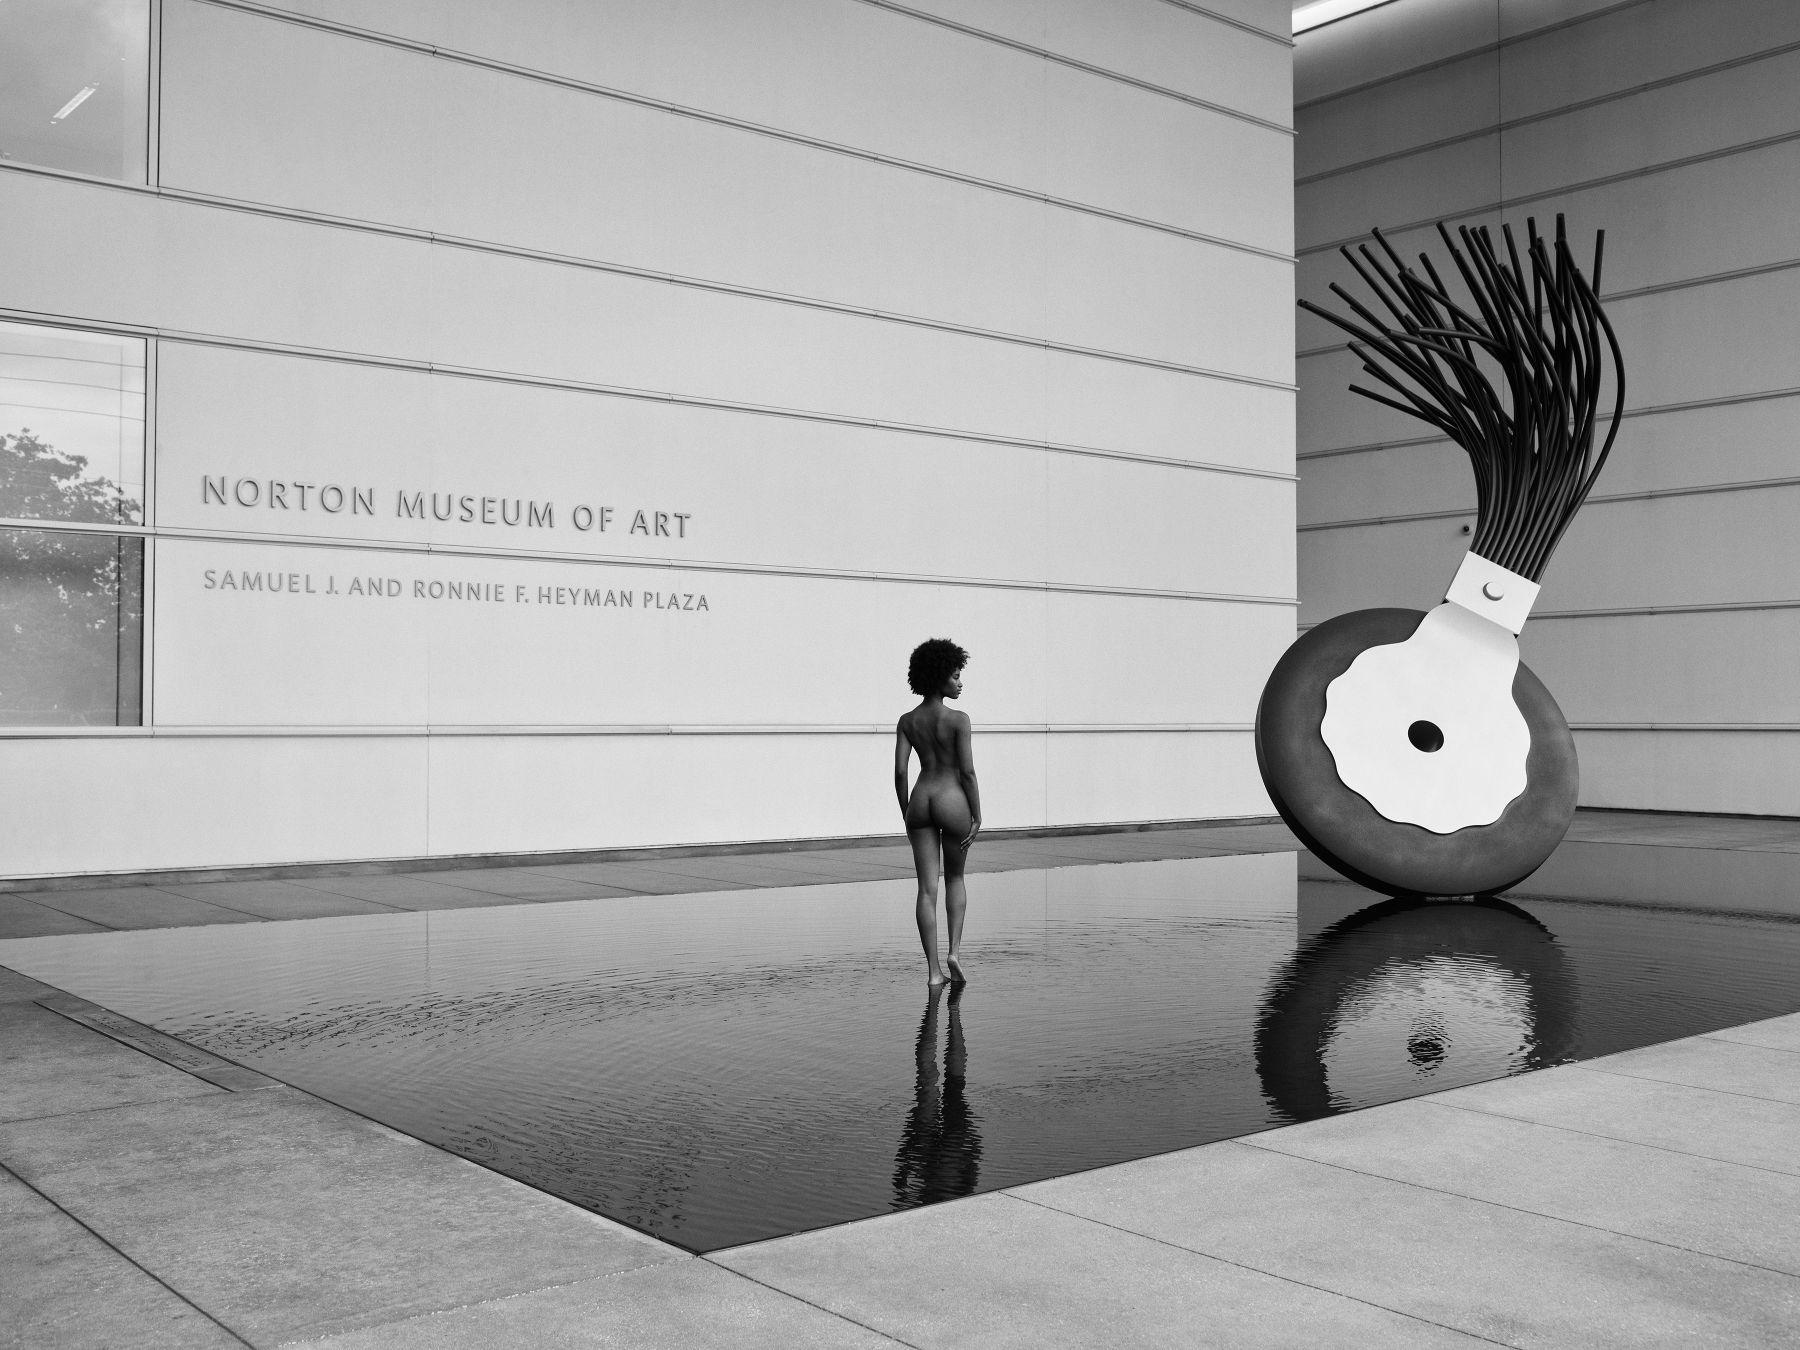 Black and White Photograph Nathan Coe - The Norton